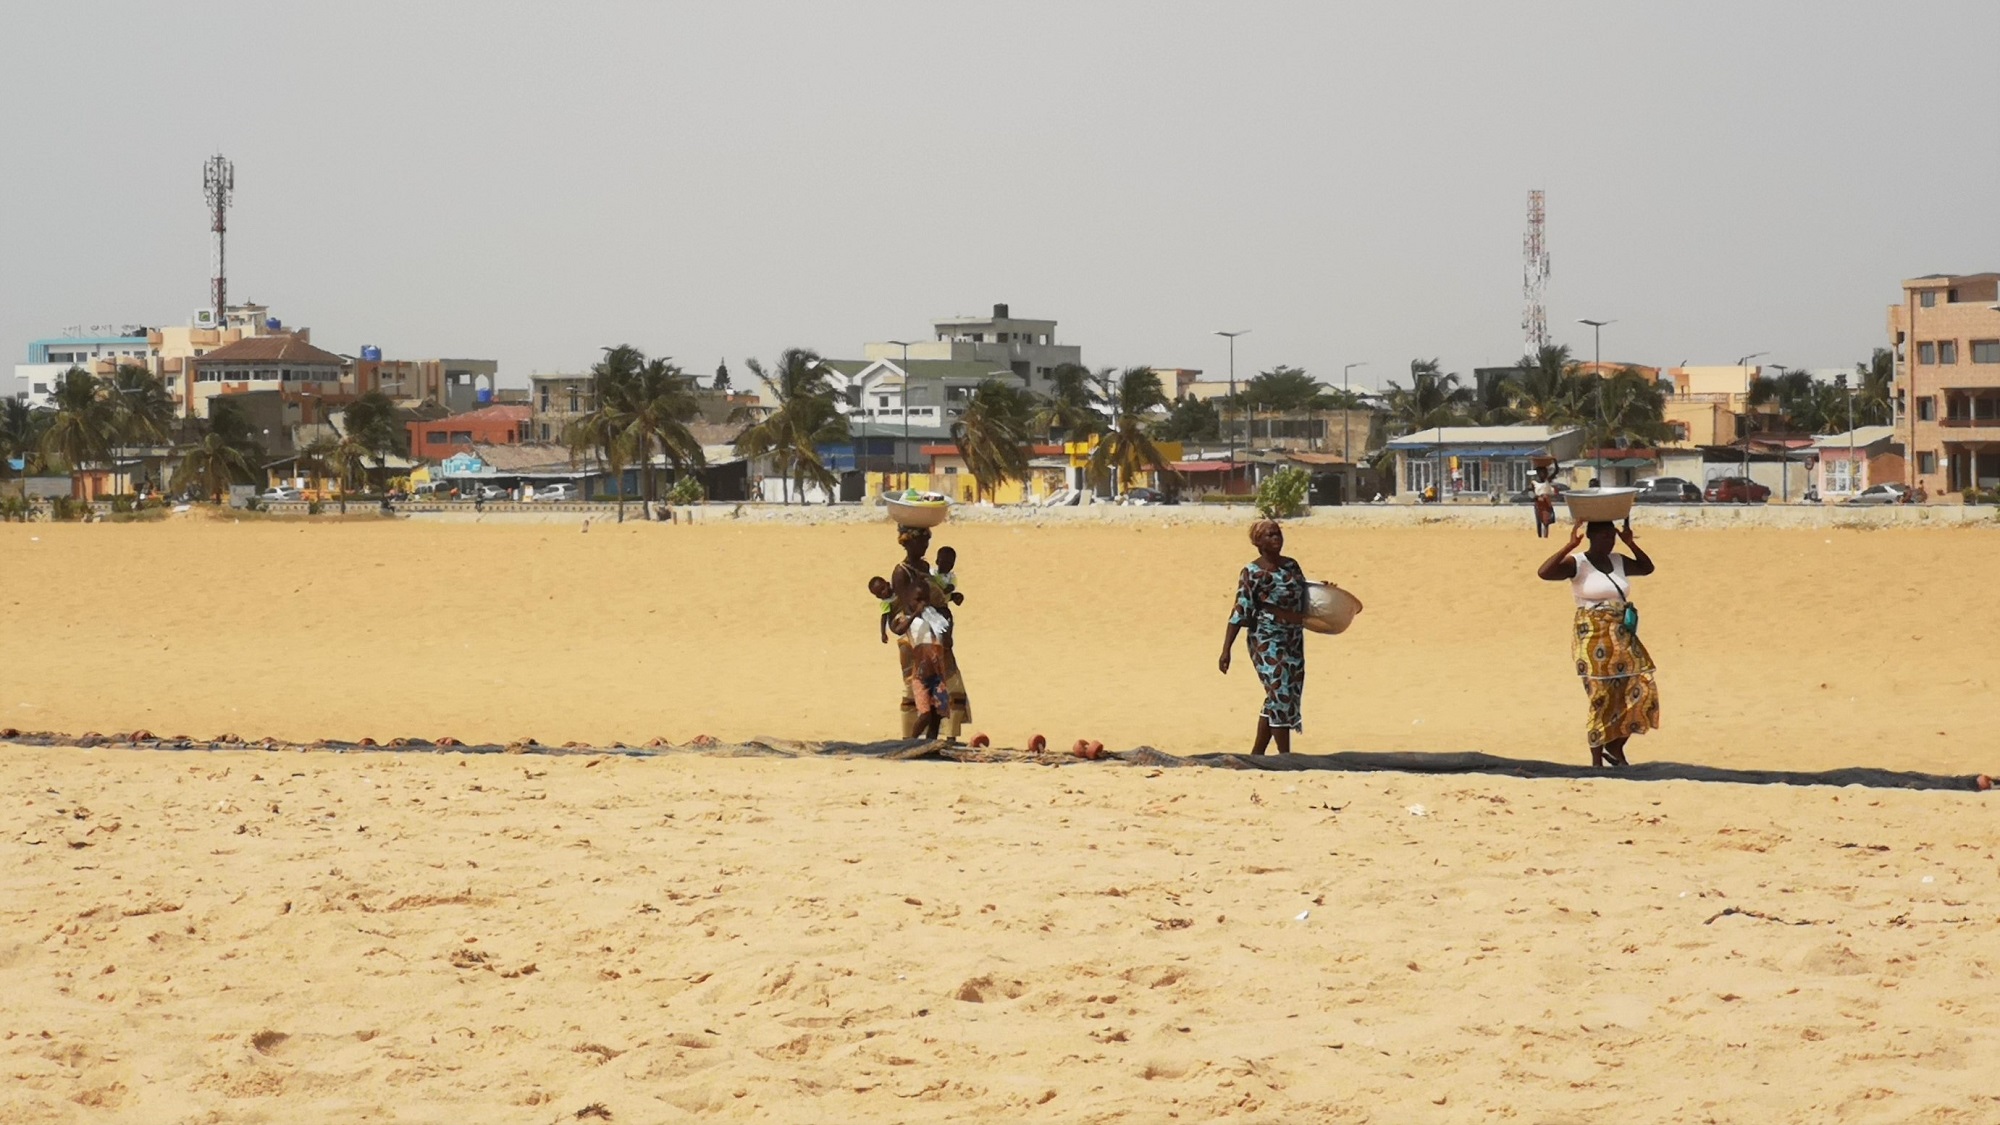 Fidjrosse Beach, with Cotonou in background.